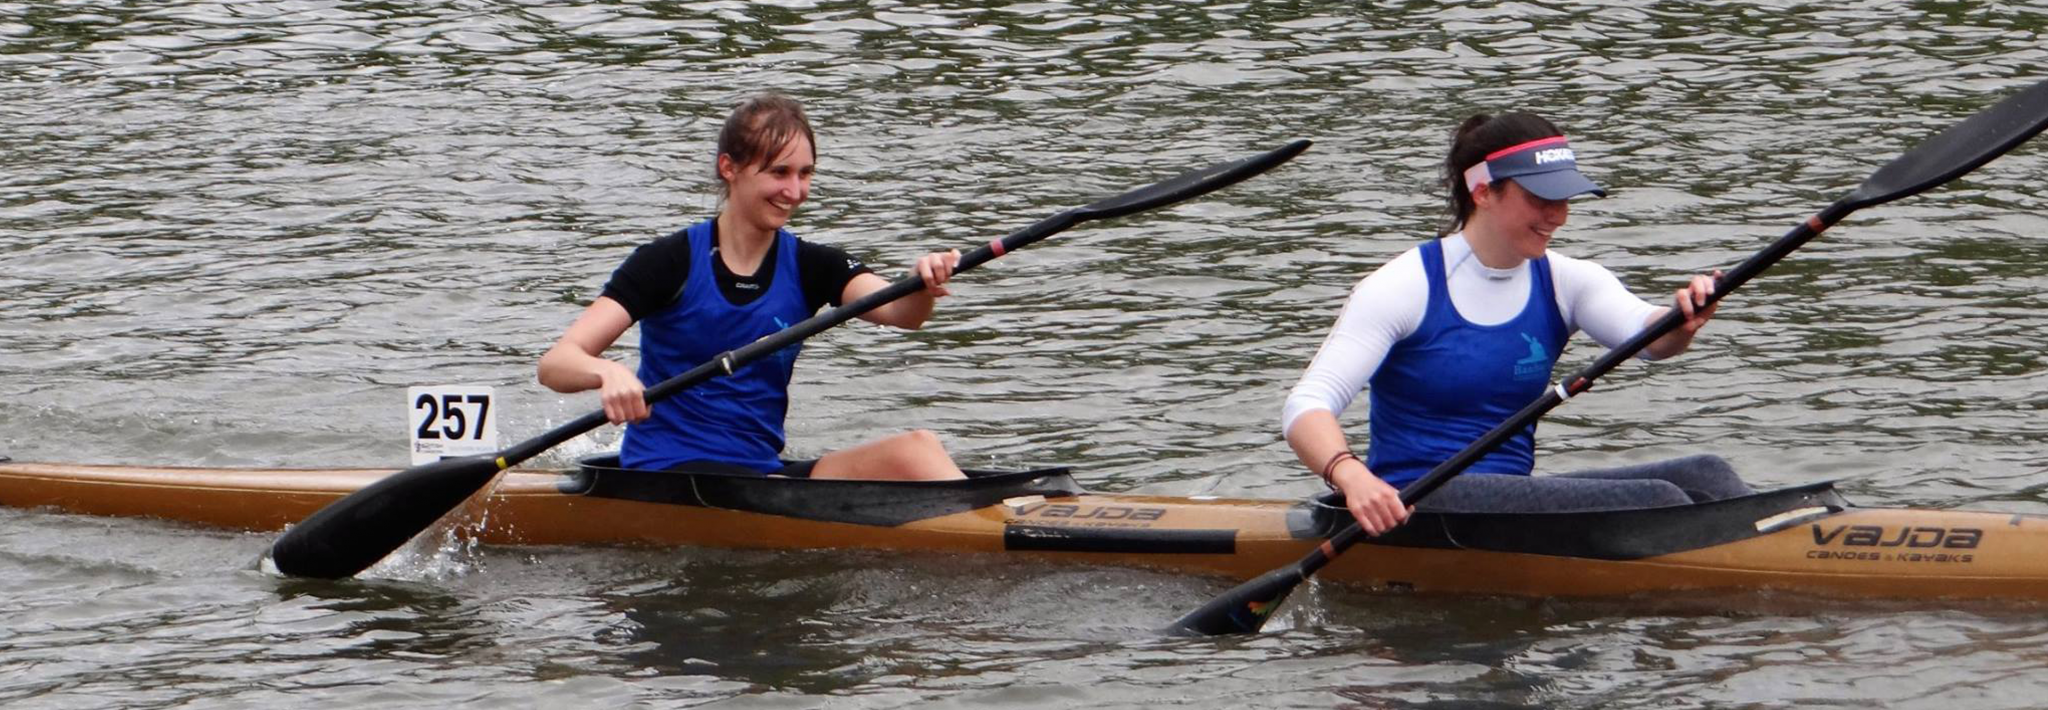 Banbury Canoe Club Racing